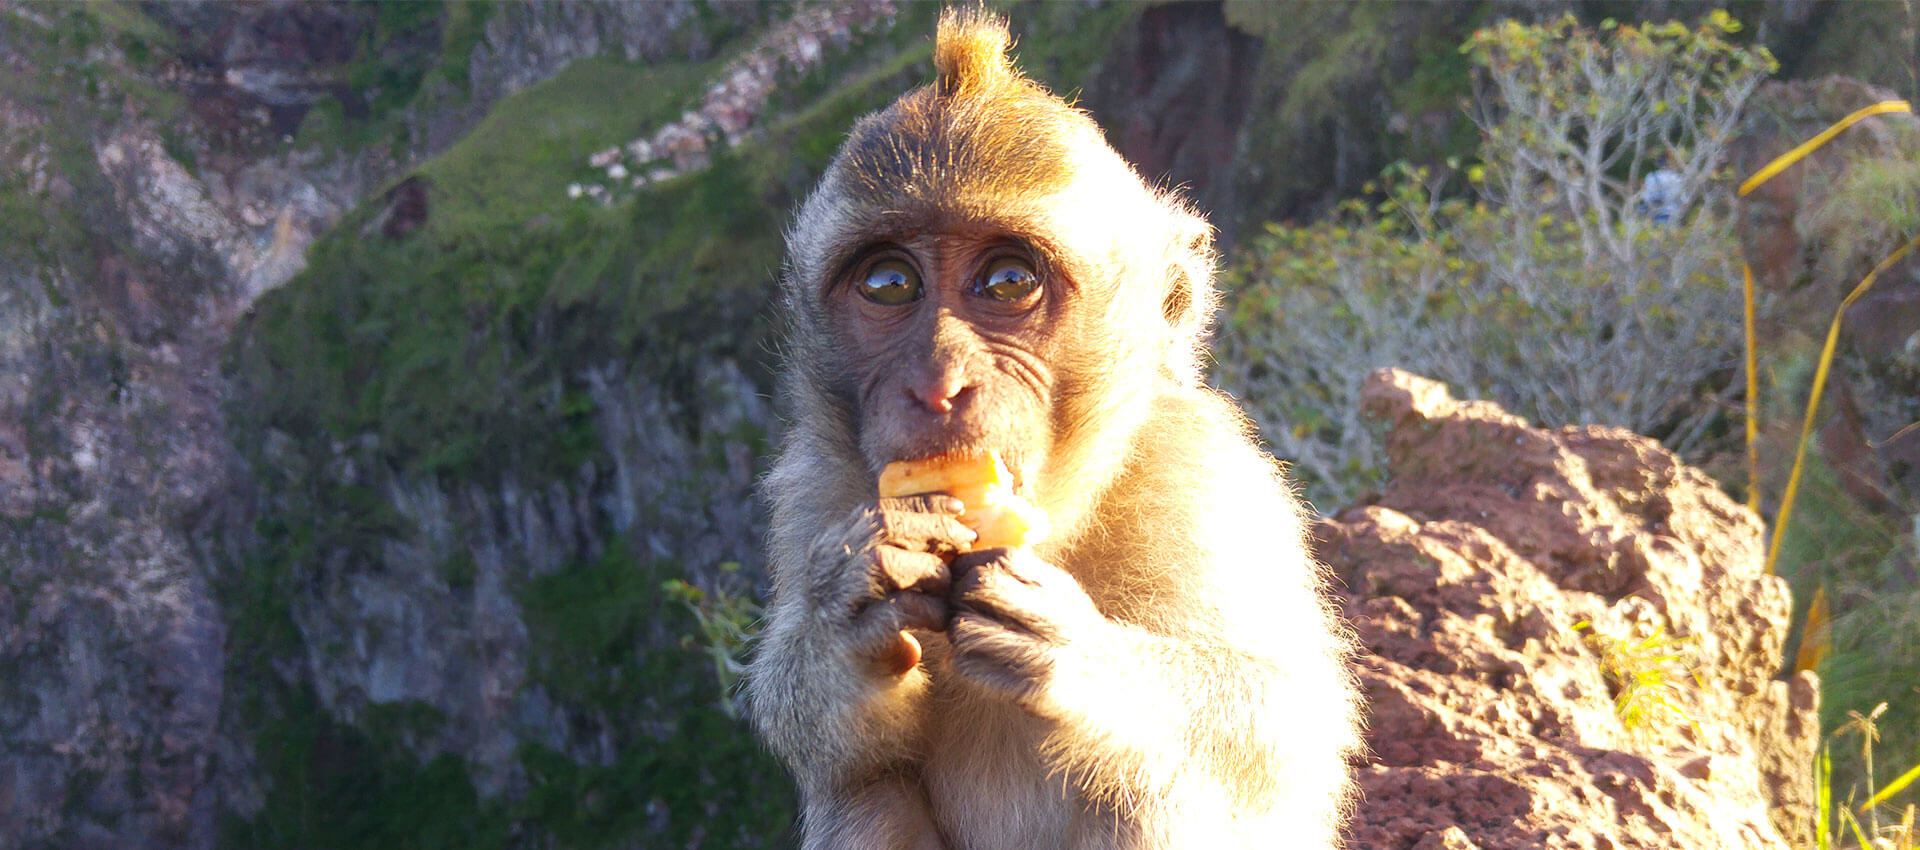 Cute monkey eating in Mount Batur, Bali